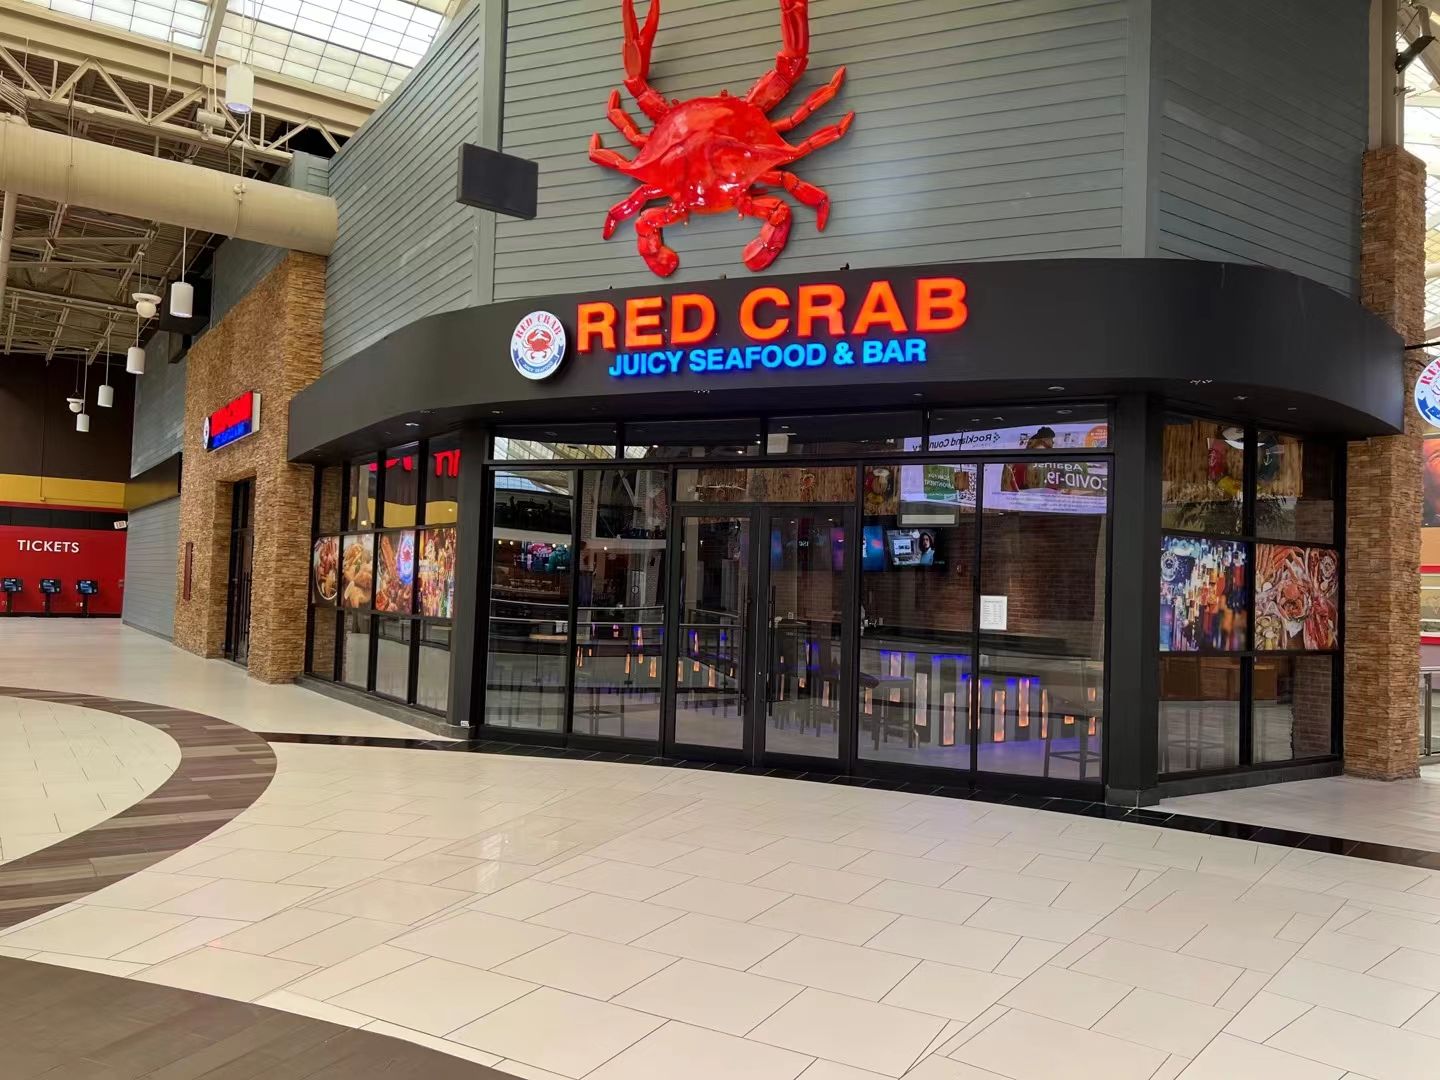 Red Crab Juicy Seafood & Bar